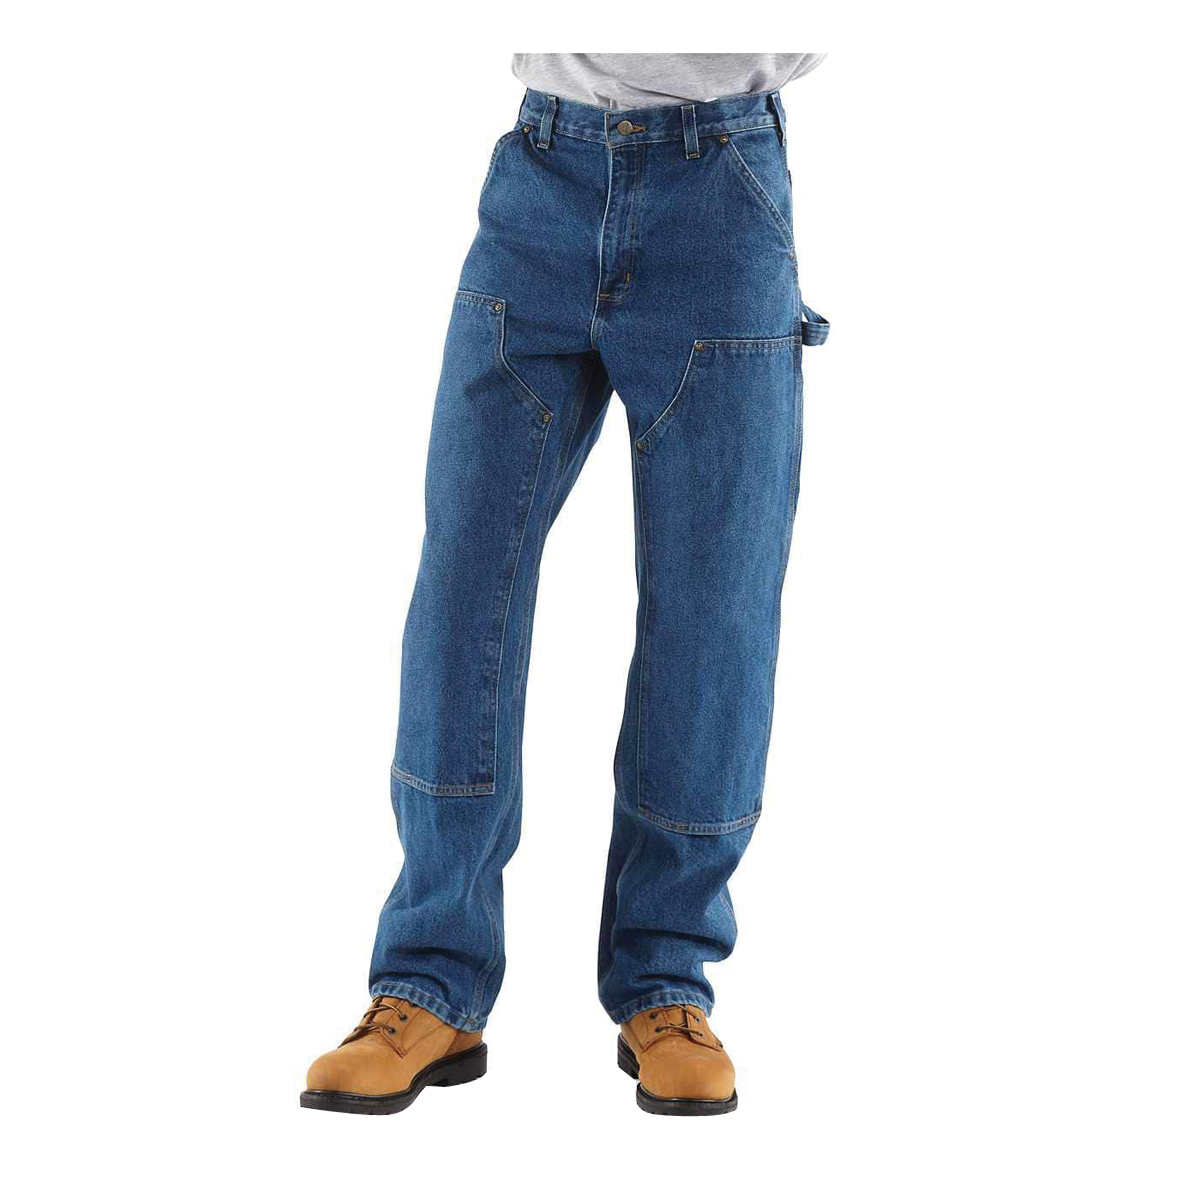 Carhartt B73-DST-40X30 Utility Logger Jeans, 40 in Waist, 30 in L Inseam, Darkstone, Loose Fit - 5